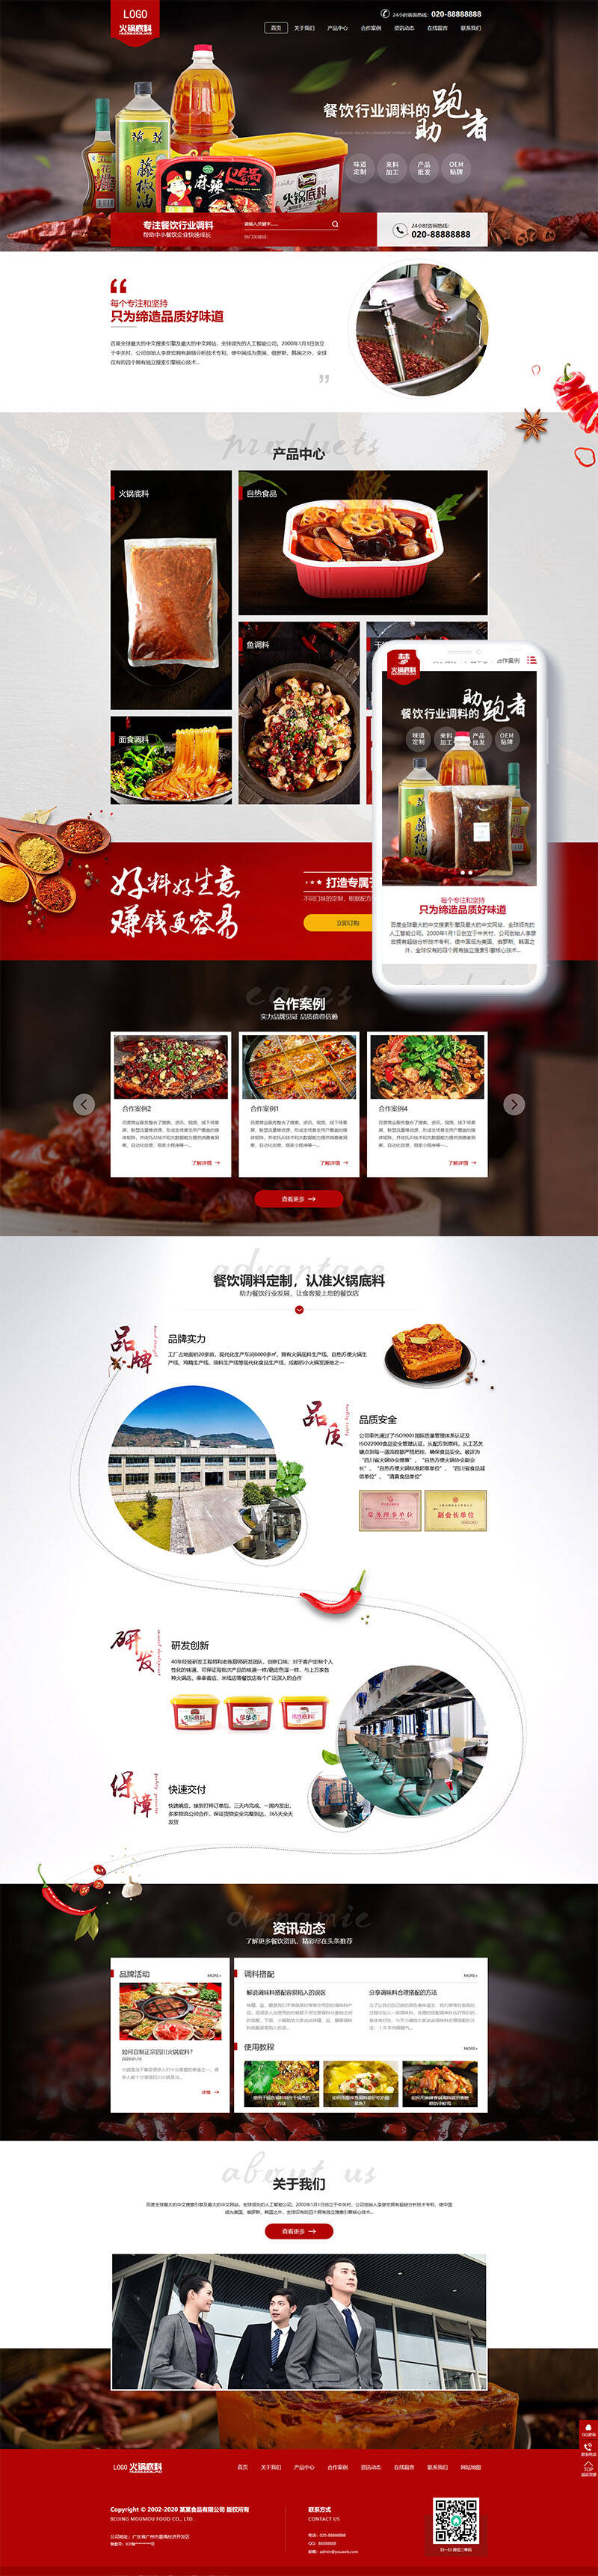 M1012 高端火锅底料食品调料网站pbootcms模板 营销型餐饮美食网站源码下载